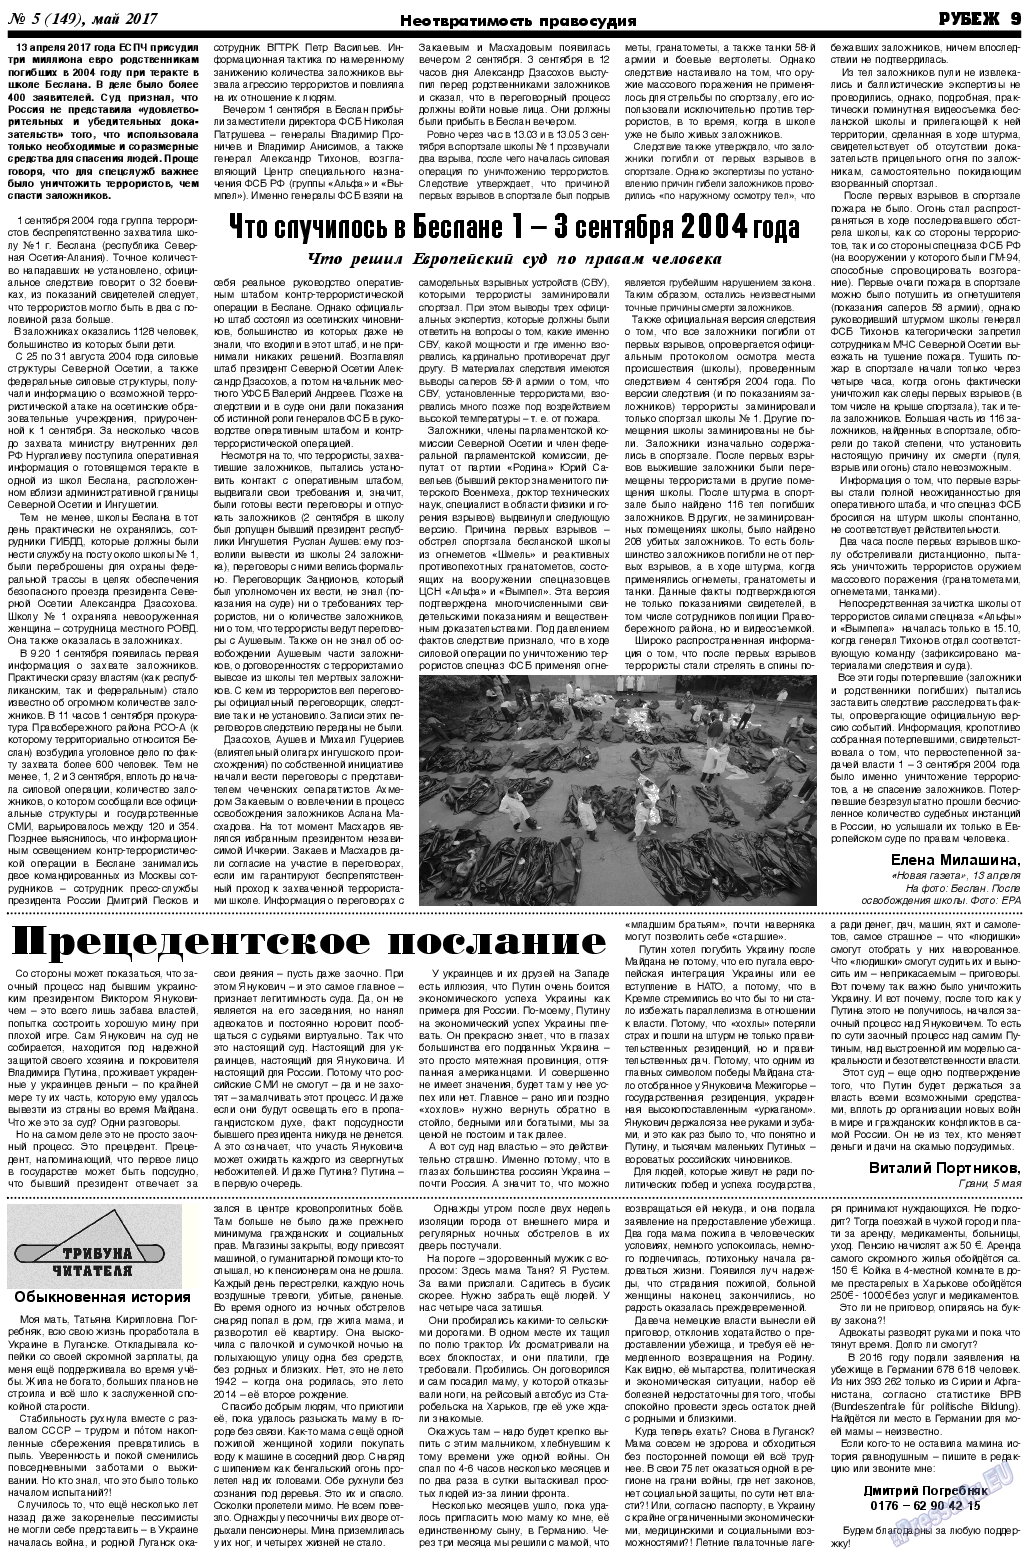 Рубеж, газета. 2017 №5 стр.9